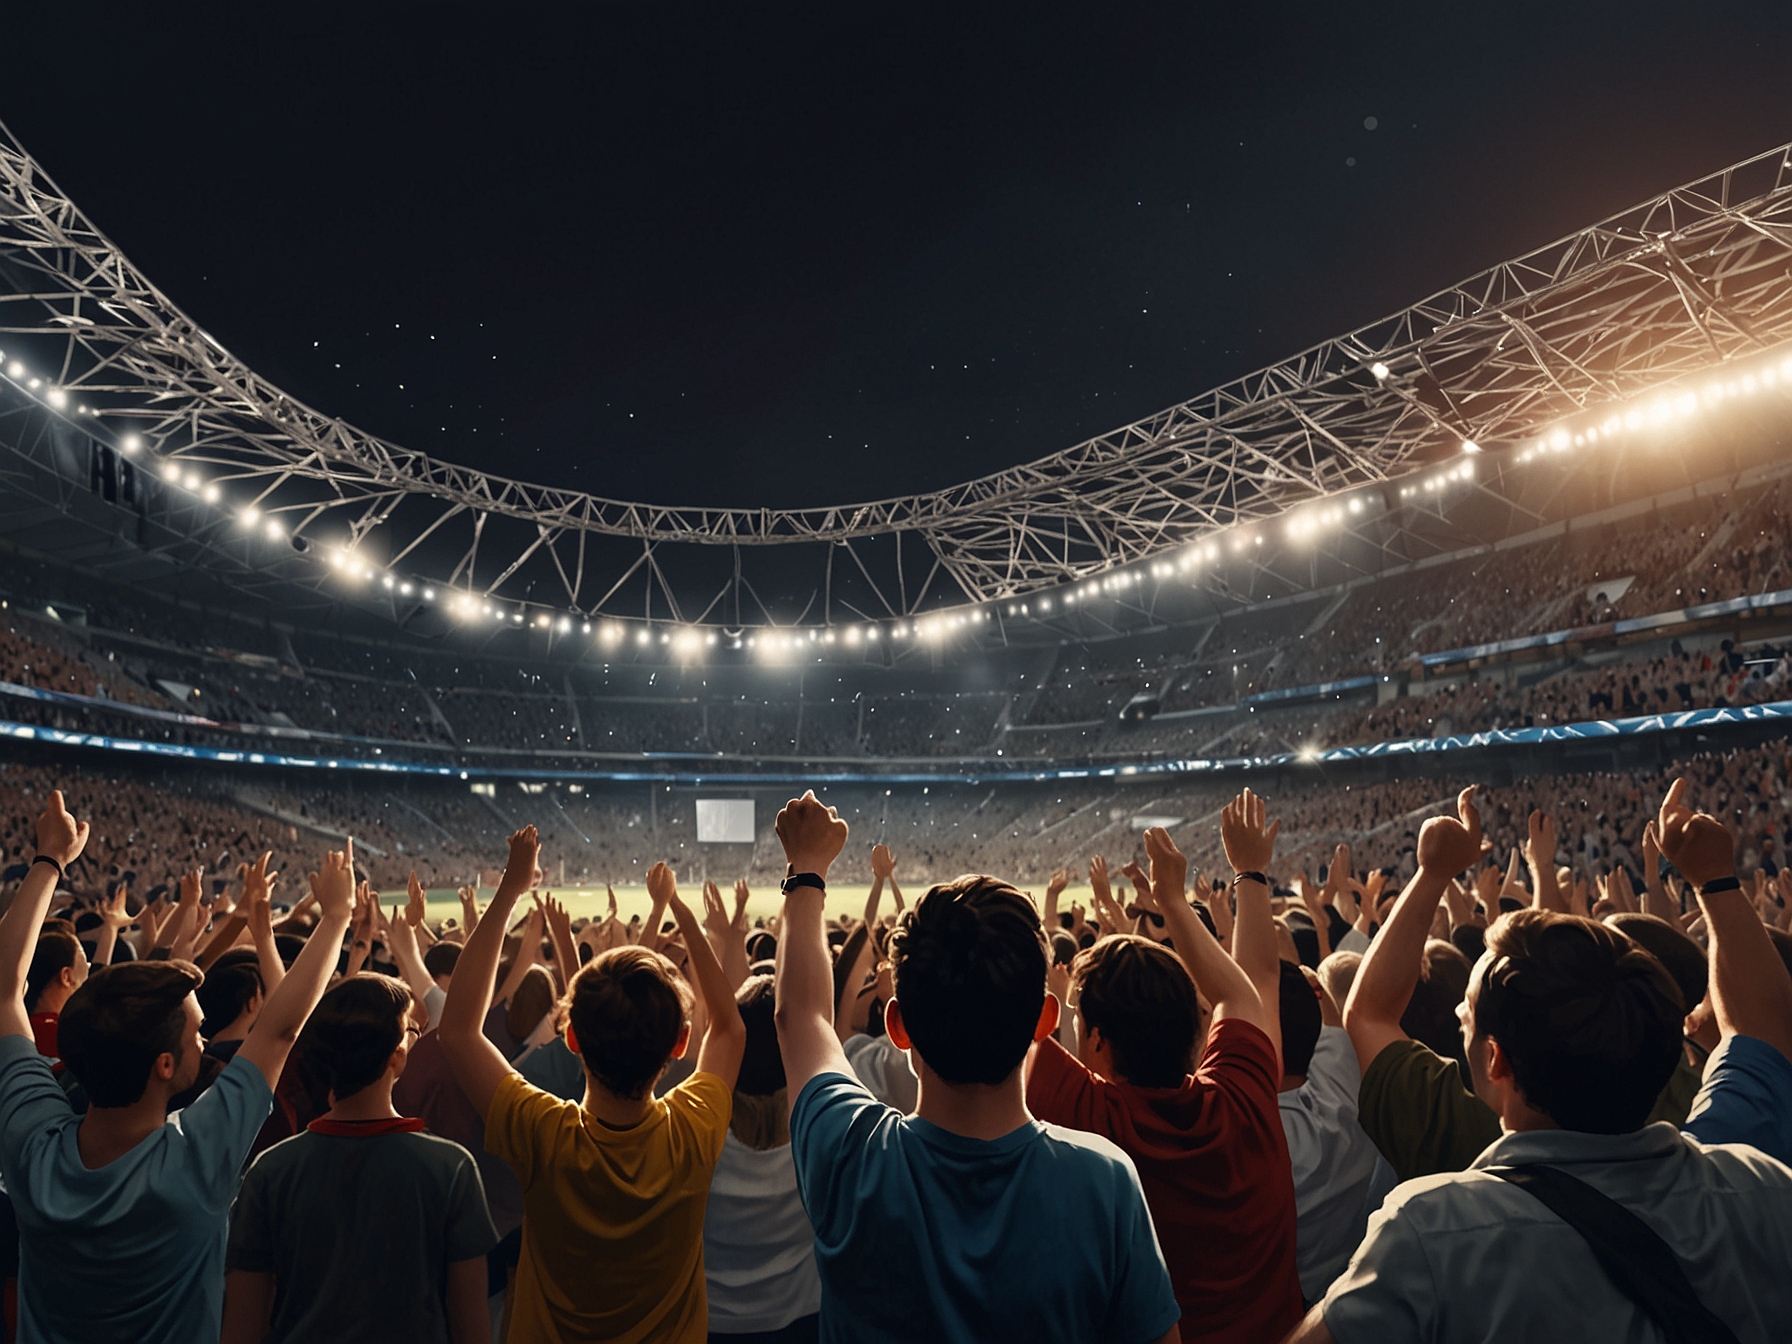 Crowd of fans cheering and enjoying performances at Wembley Stadium, London.